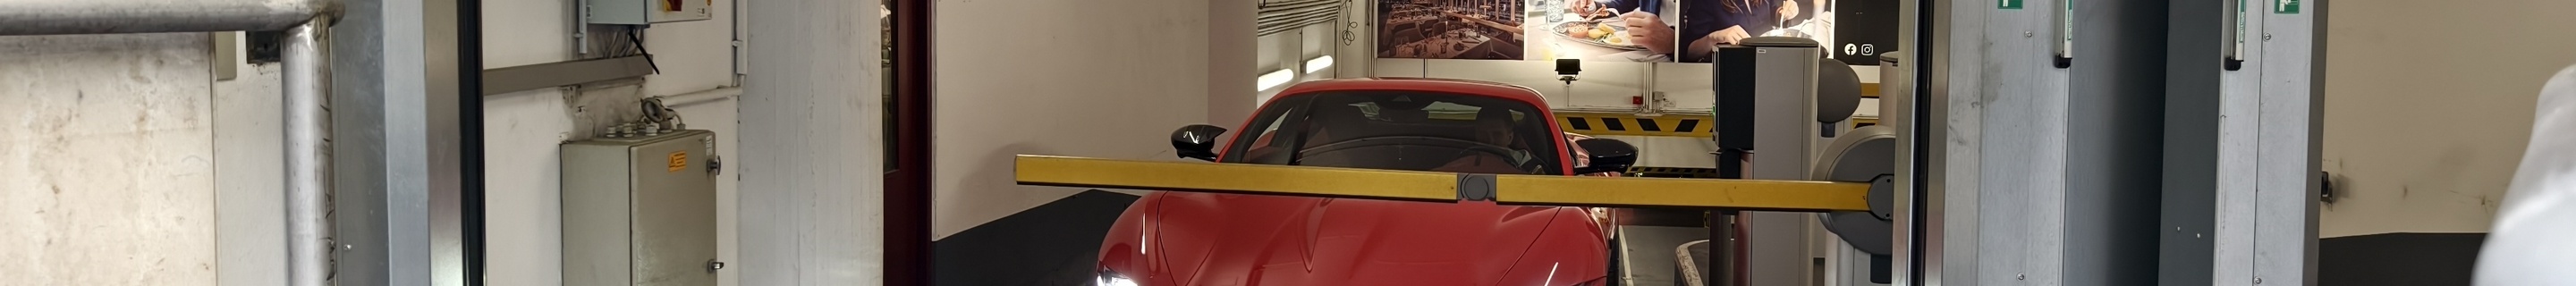 Ferrari Roma Mansory